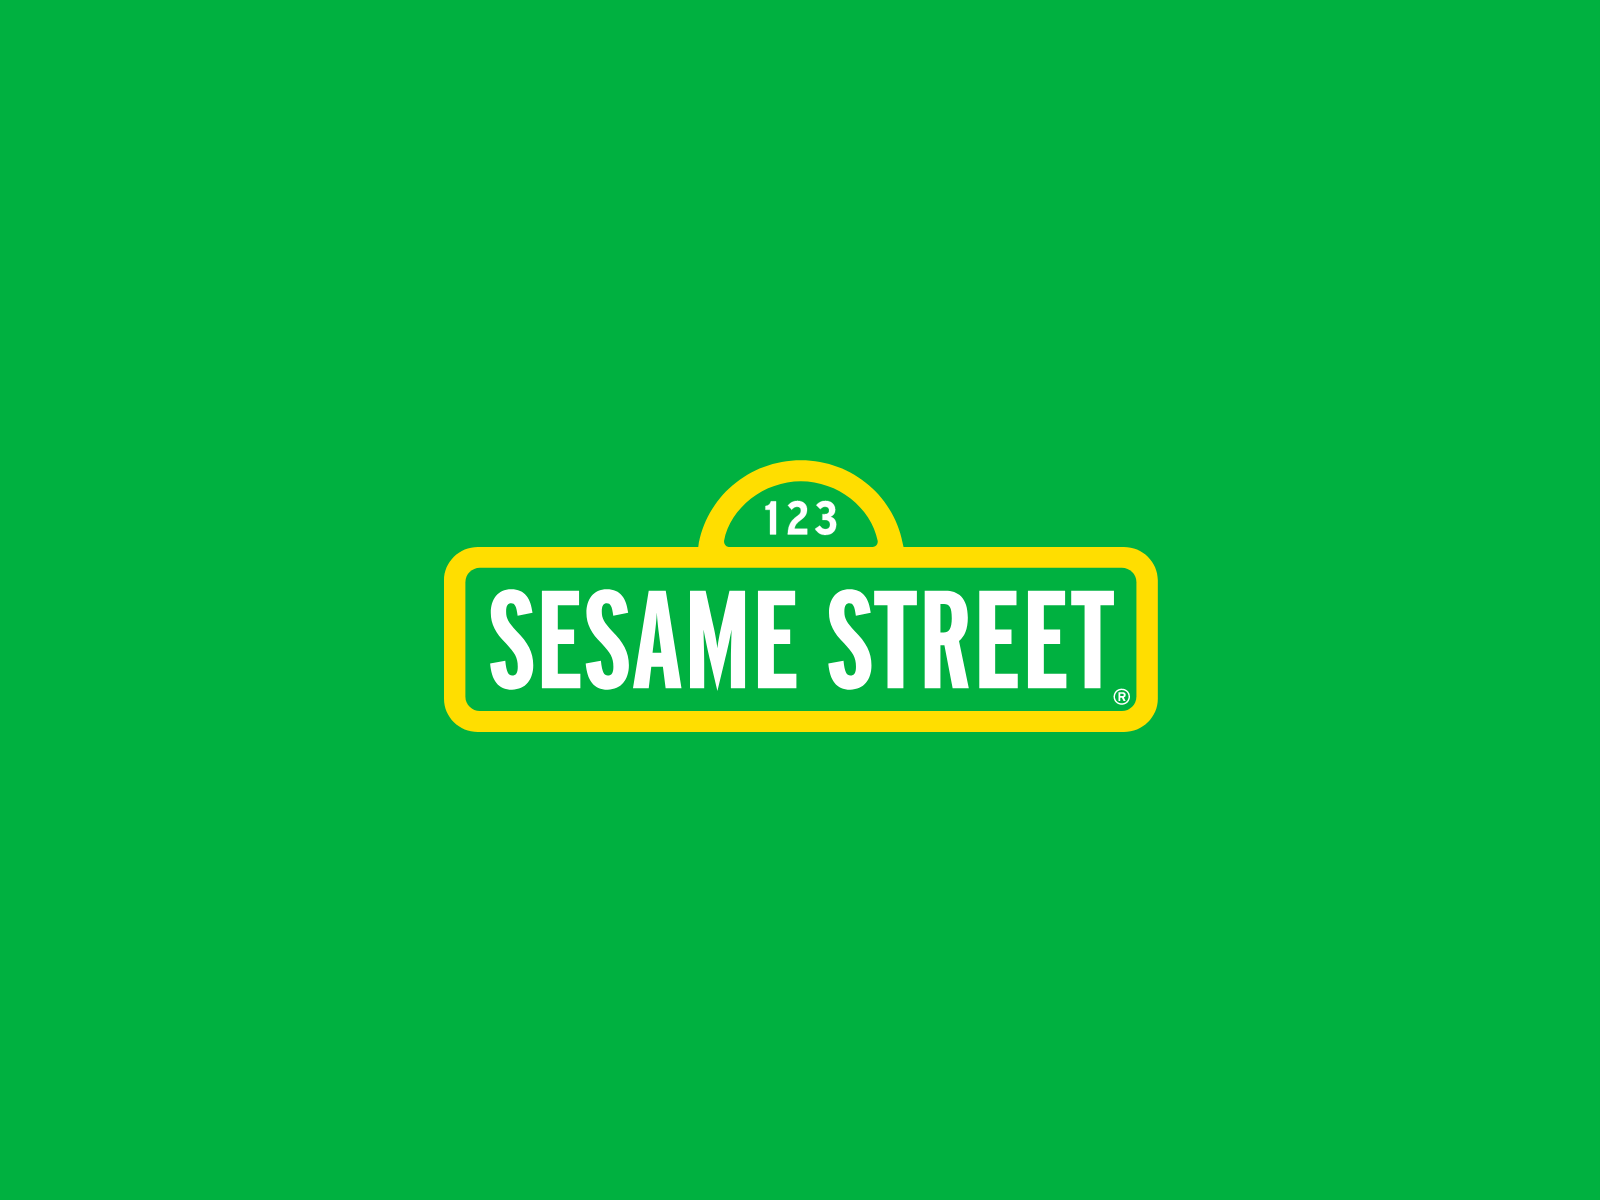 Sesame Street | Preschool Games, Videos, & to Help Kids Grow Smarter, Stronger & Kinder